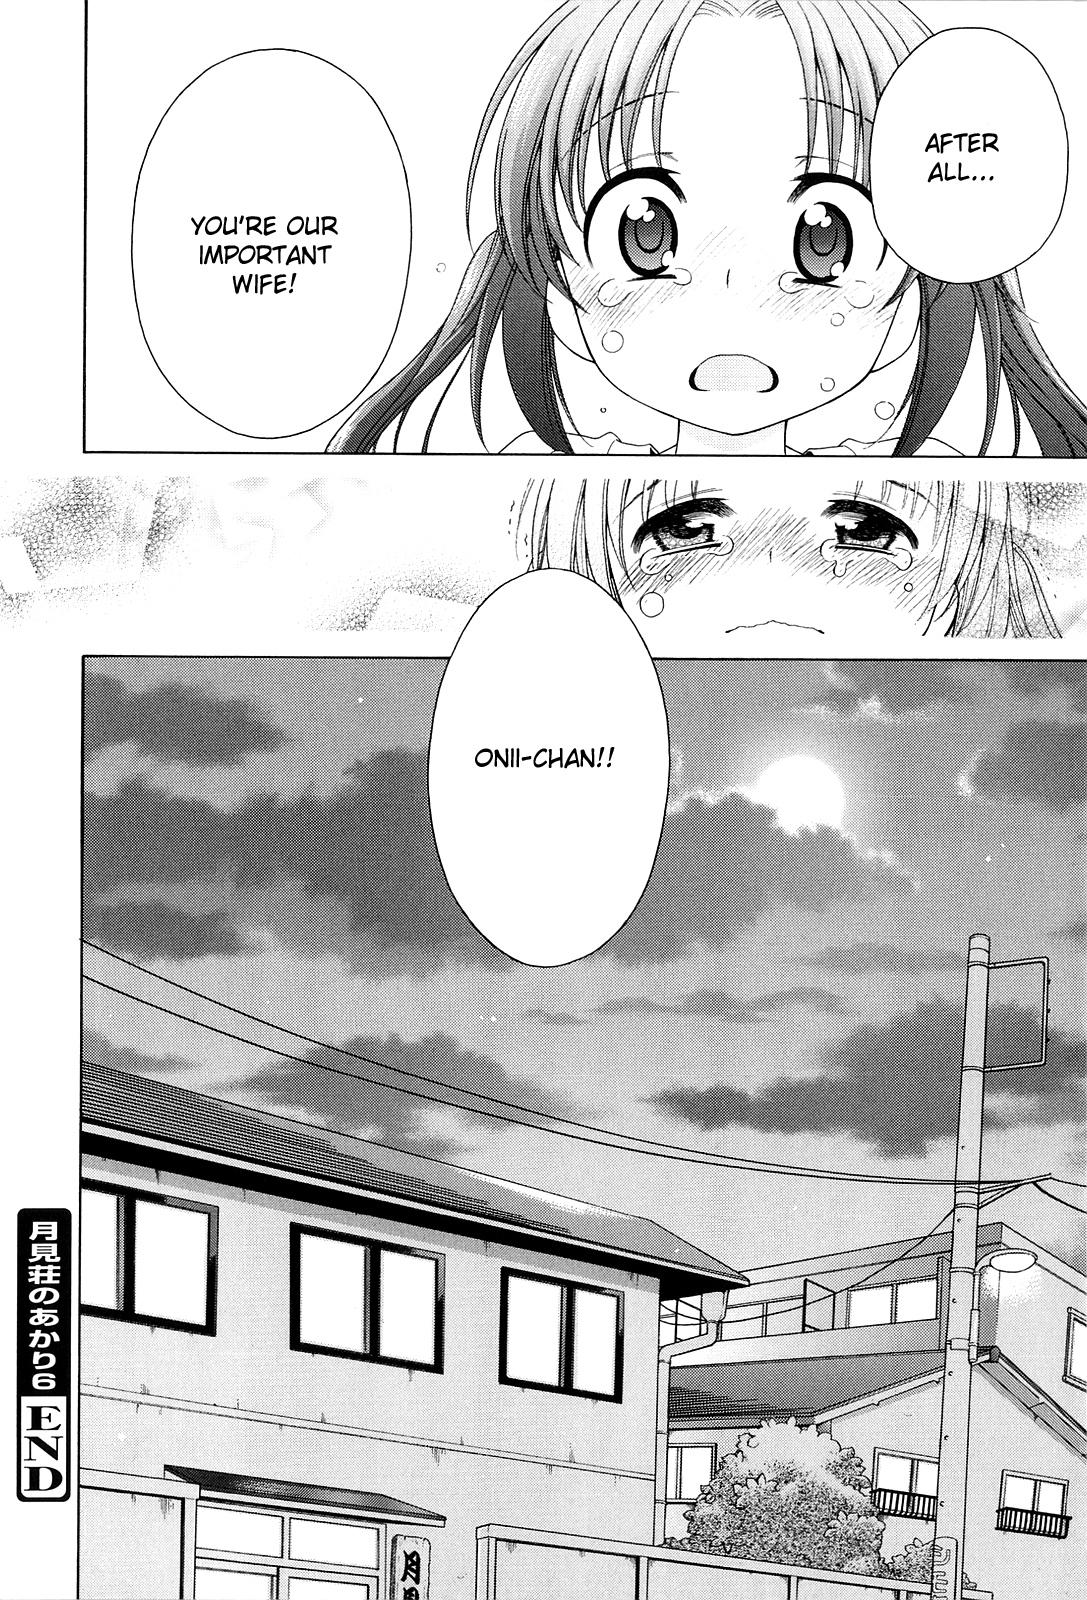 The Light of Tsukimi Manor 1-6 hentai manga picture 141